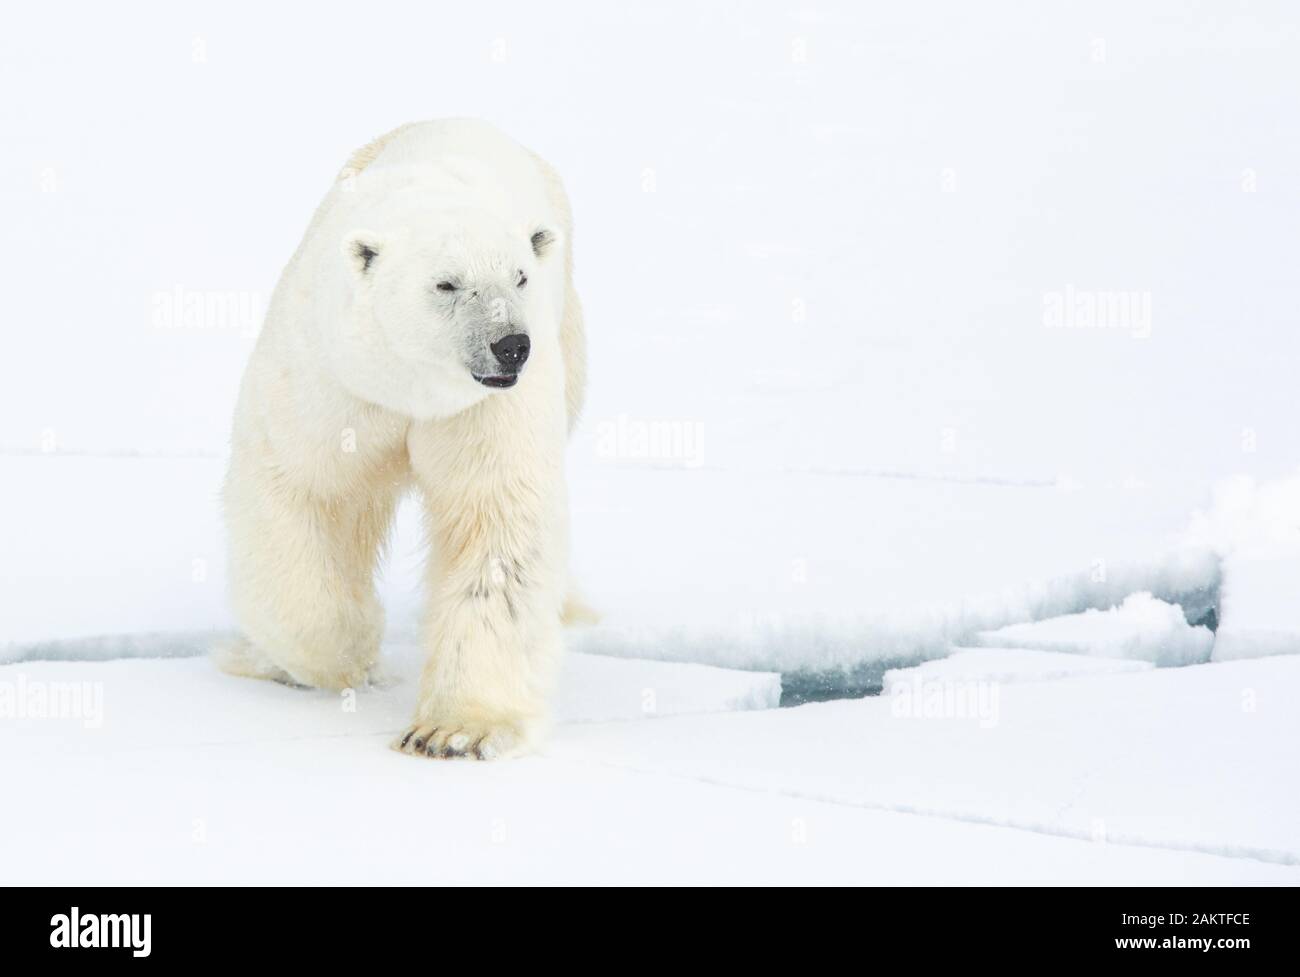 Polar bear on sea ice in the Arctic Stock Photo